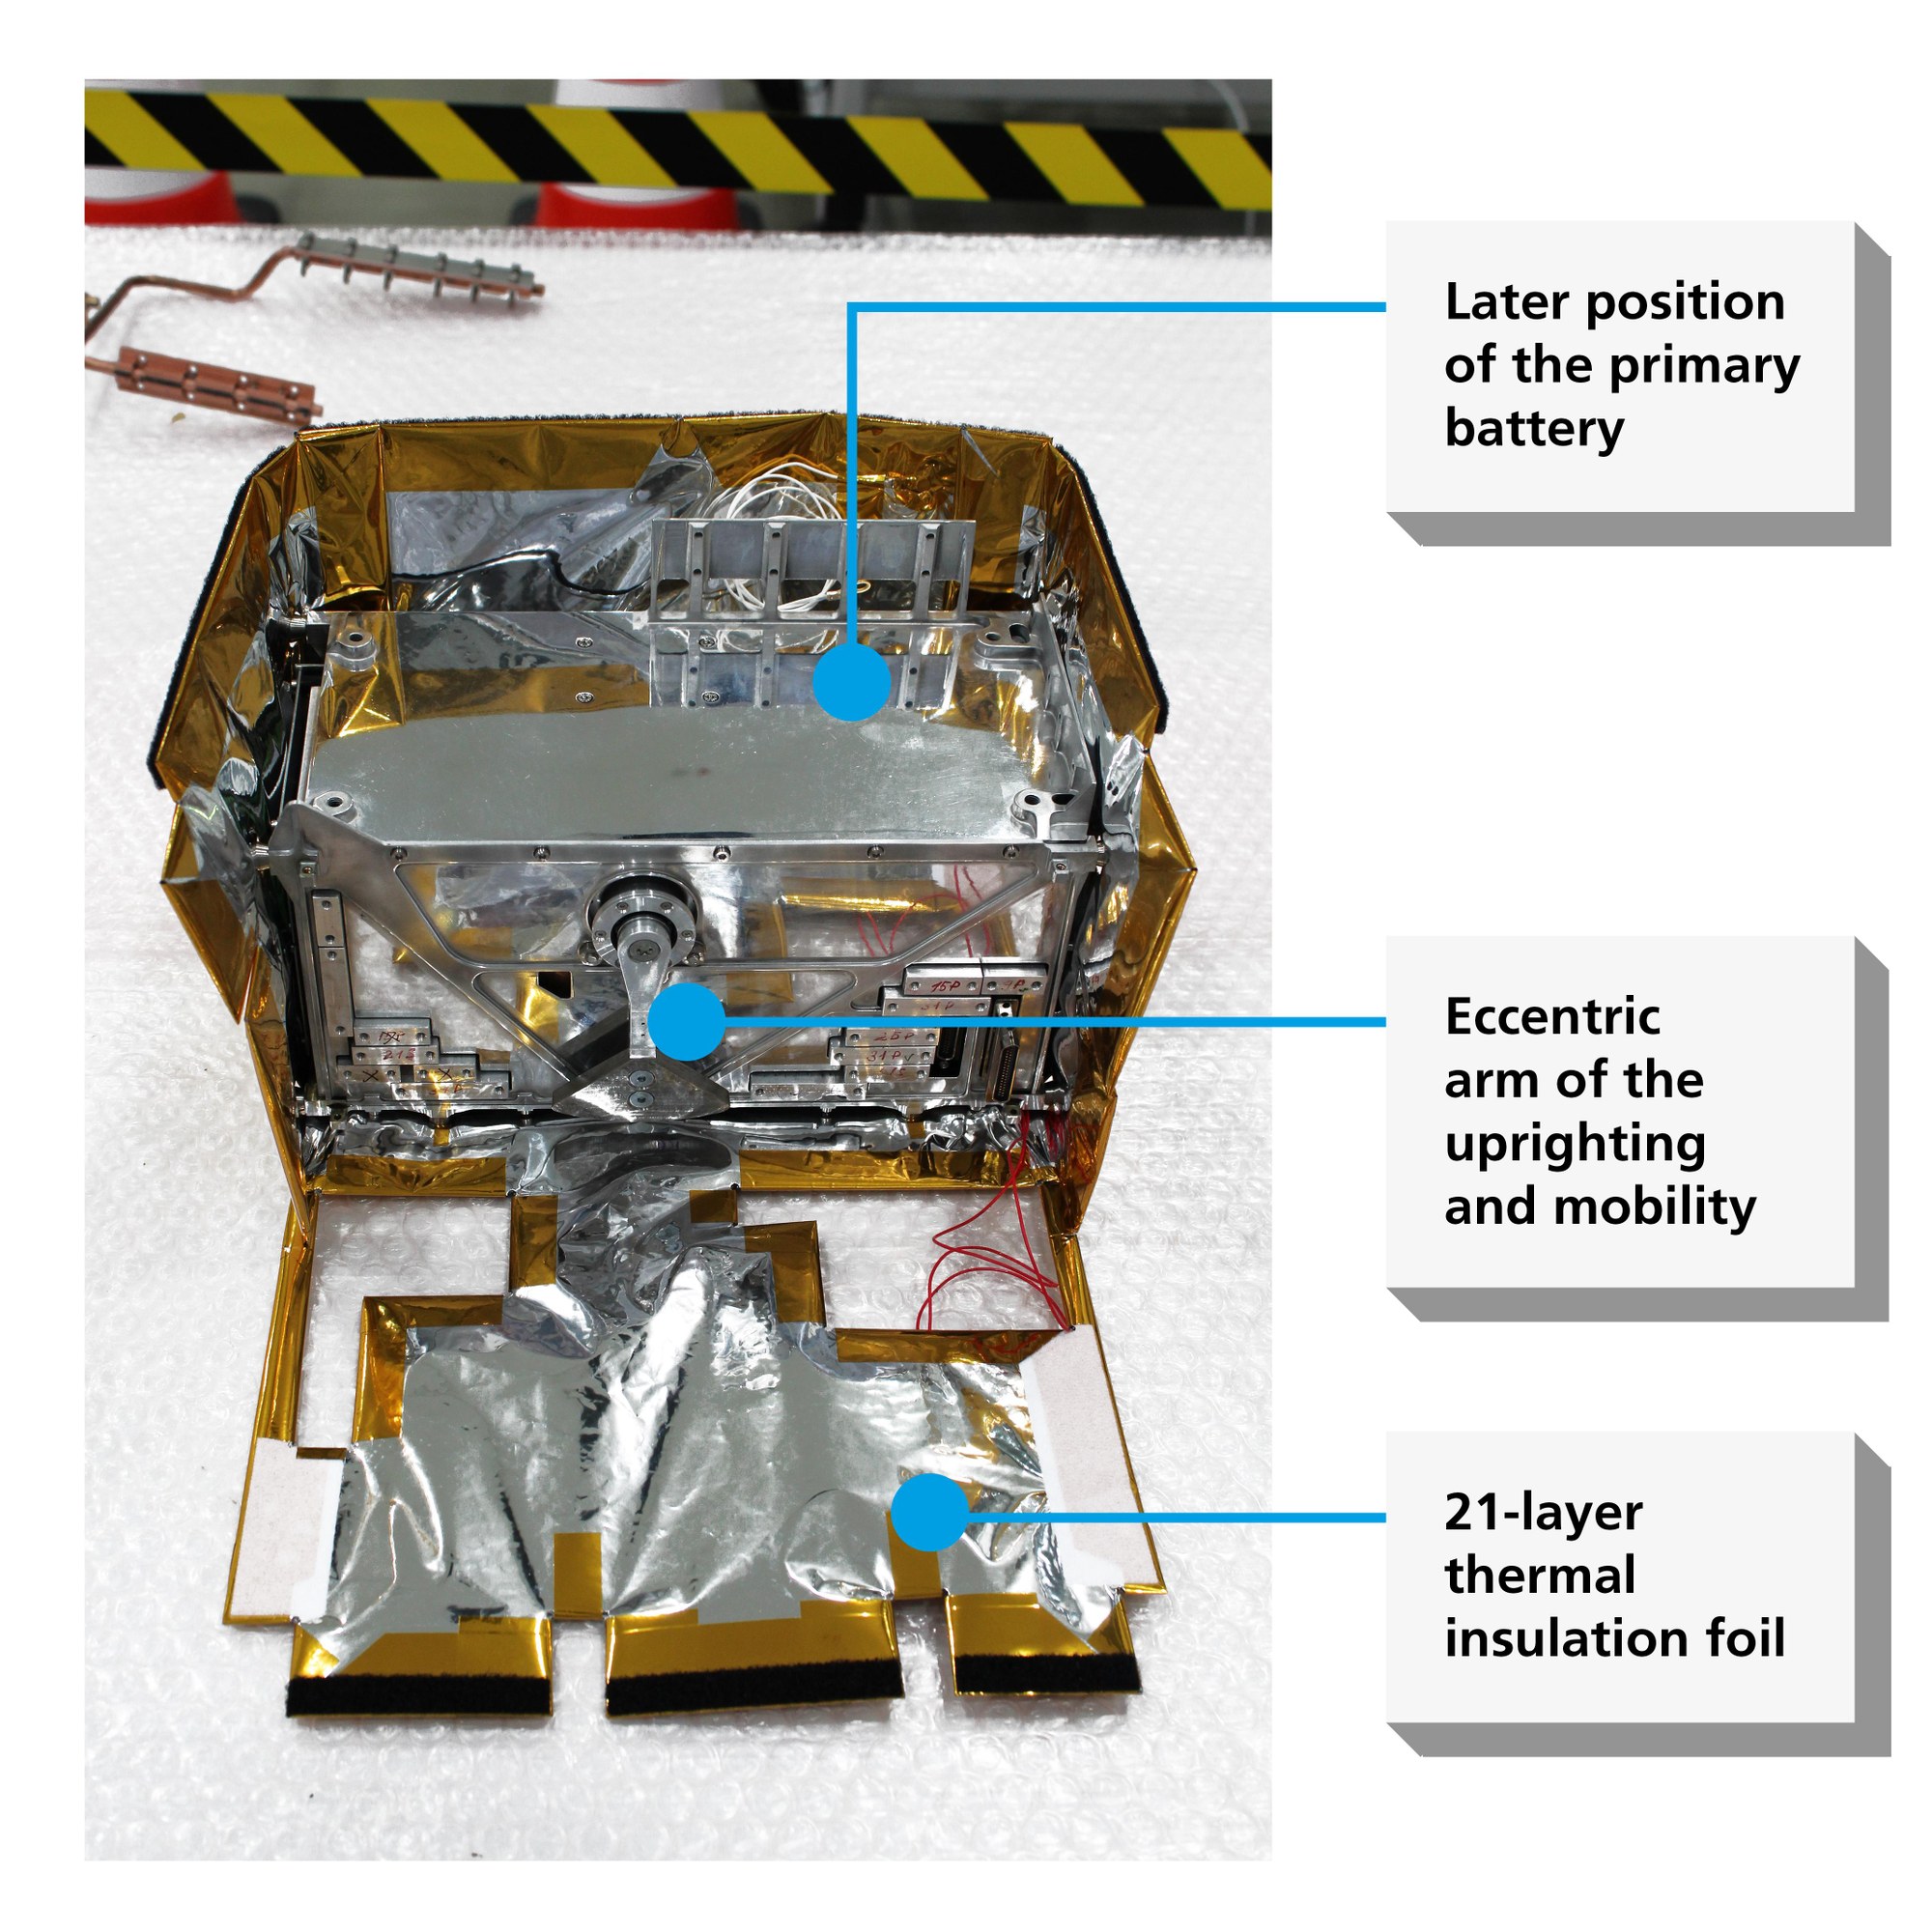 Flight compensation structure in the aluminium electronics box